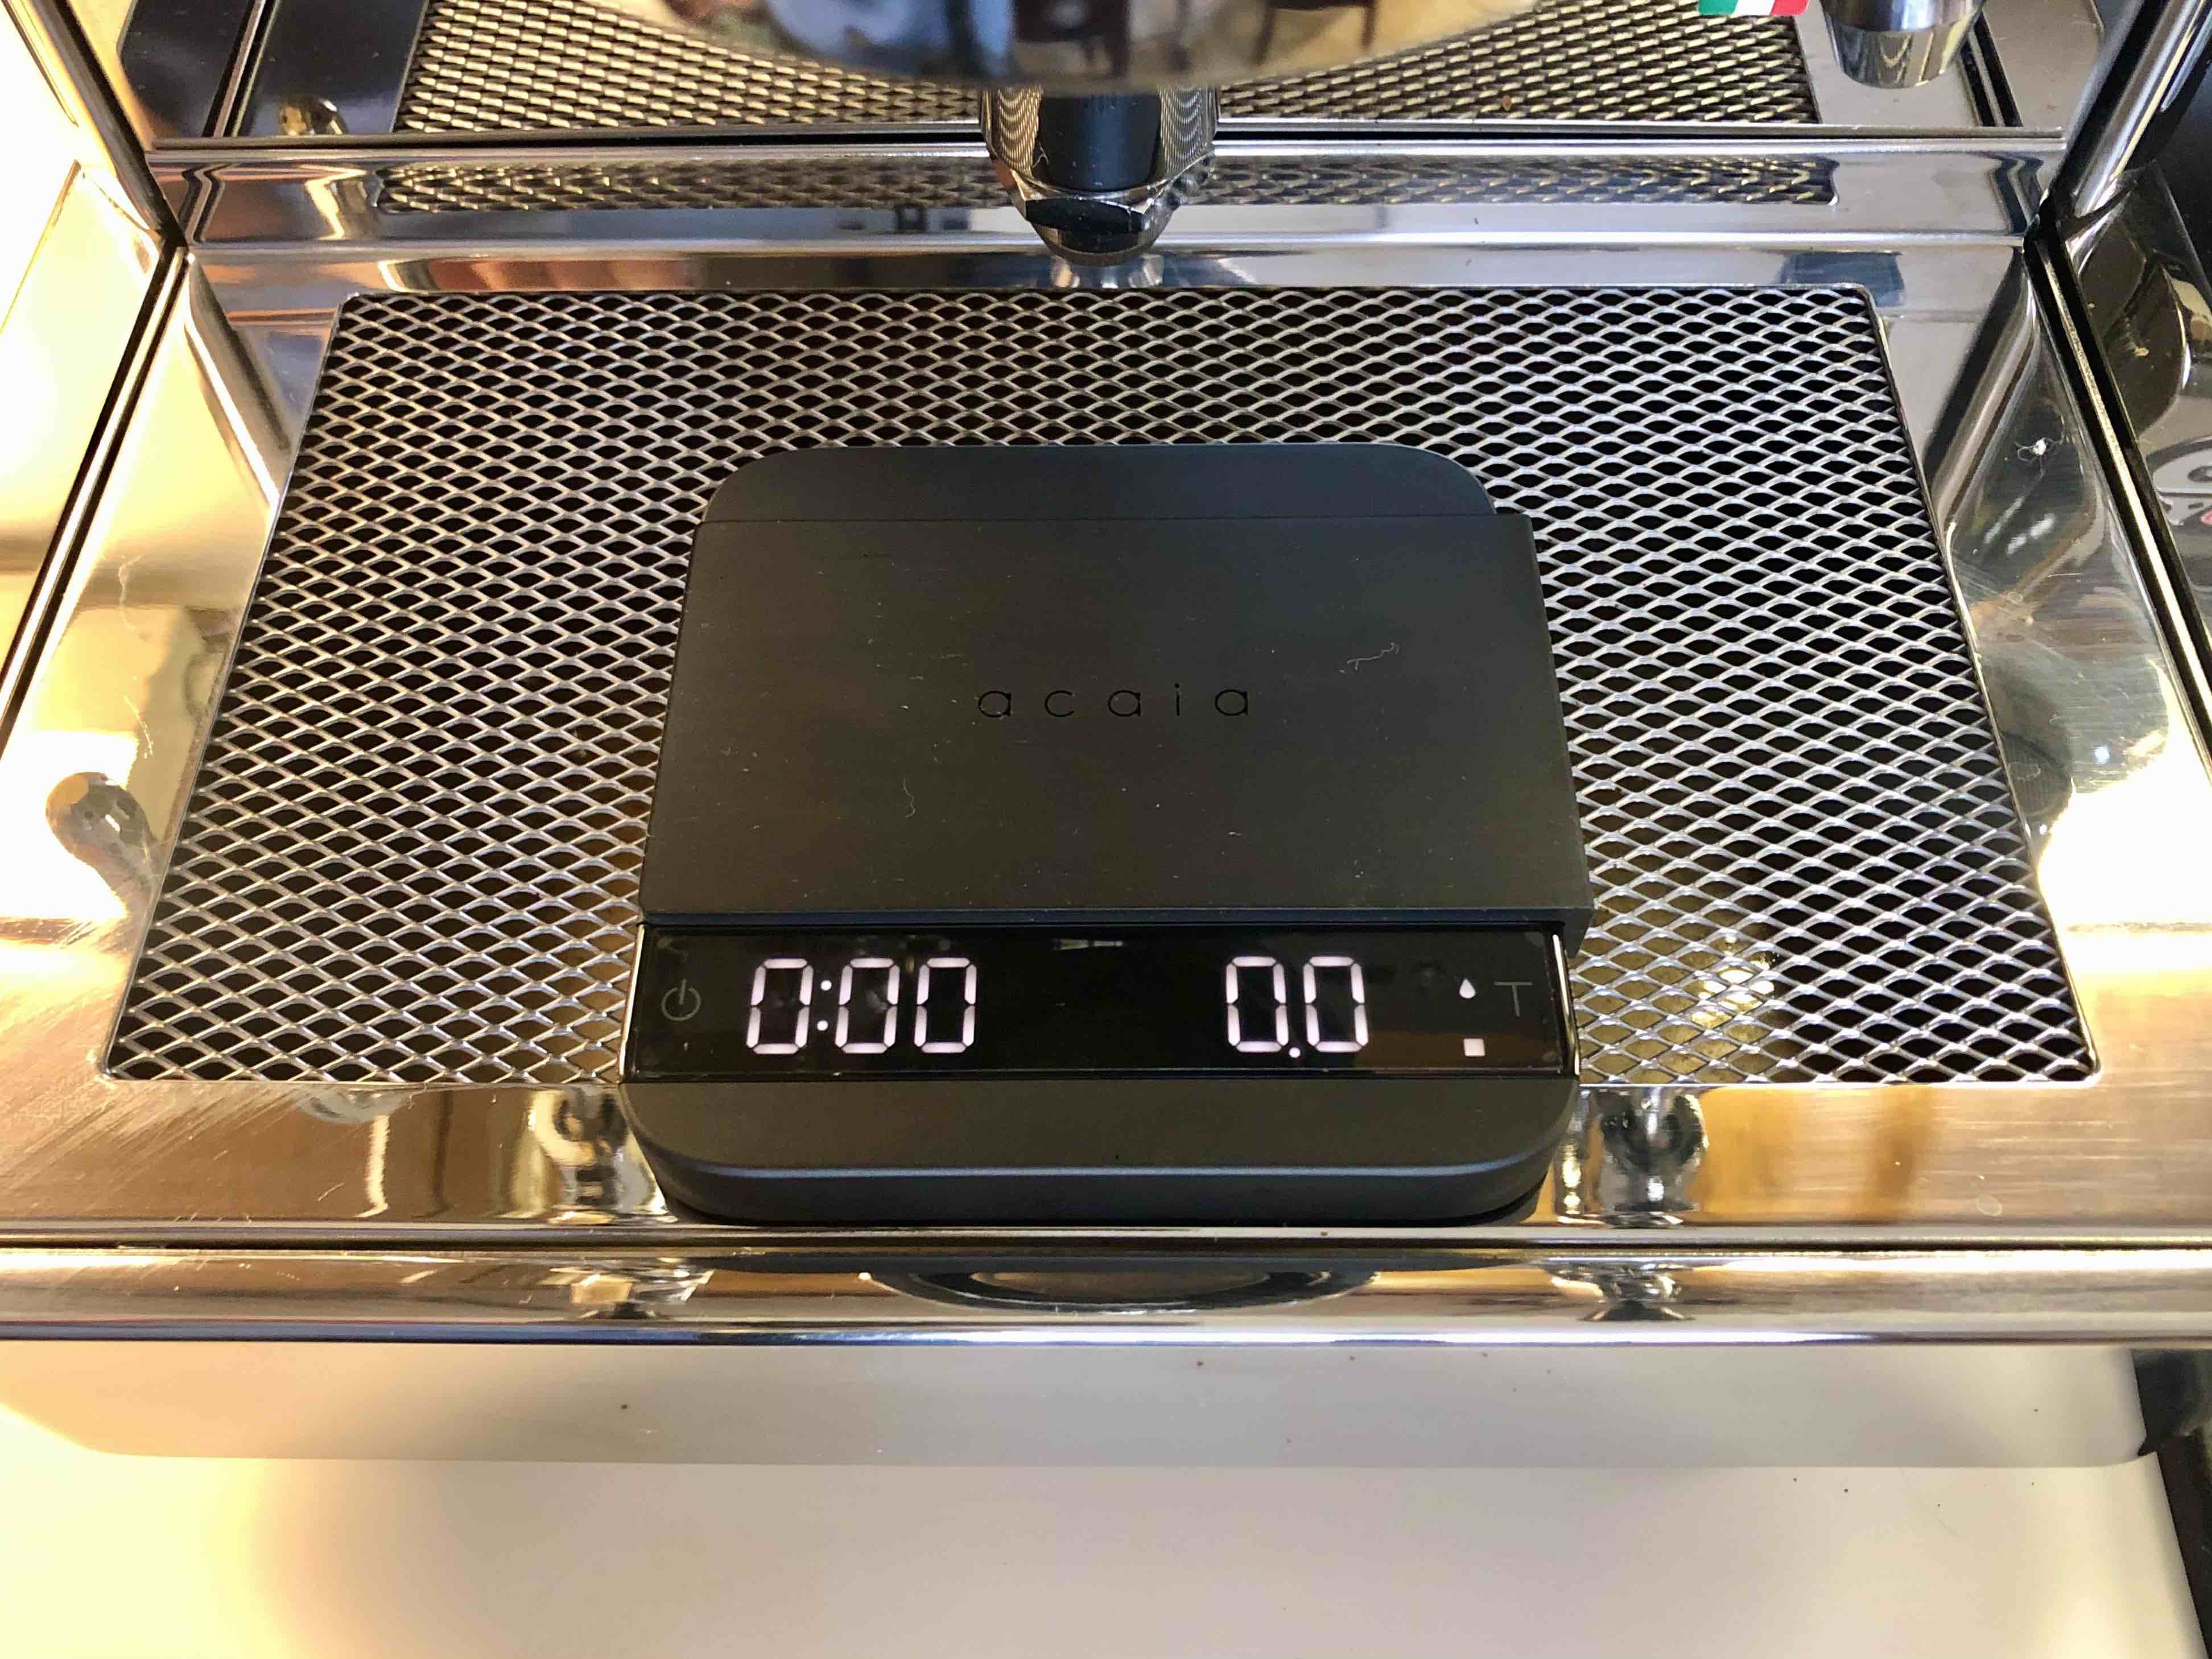 Acaia 'Lunar' Scale for Coffee